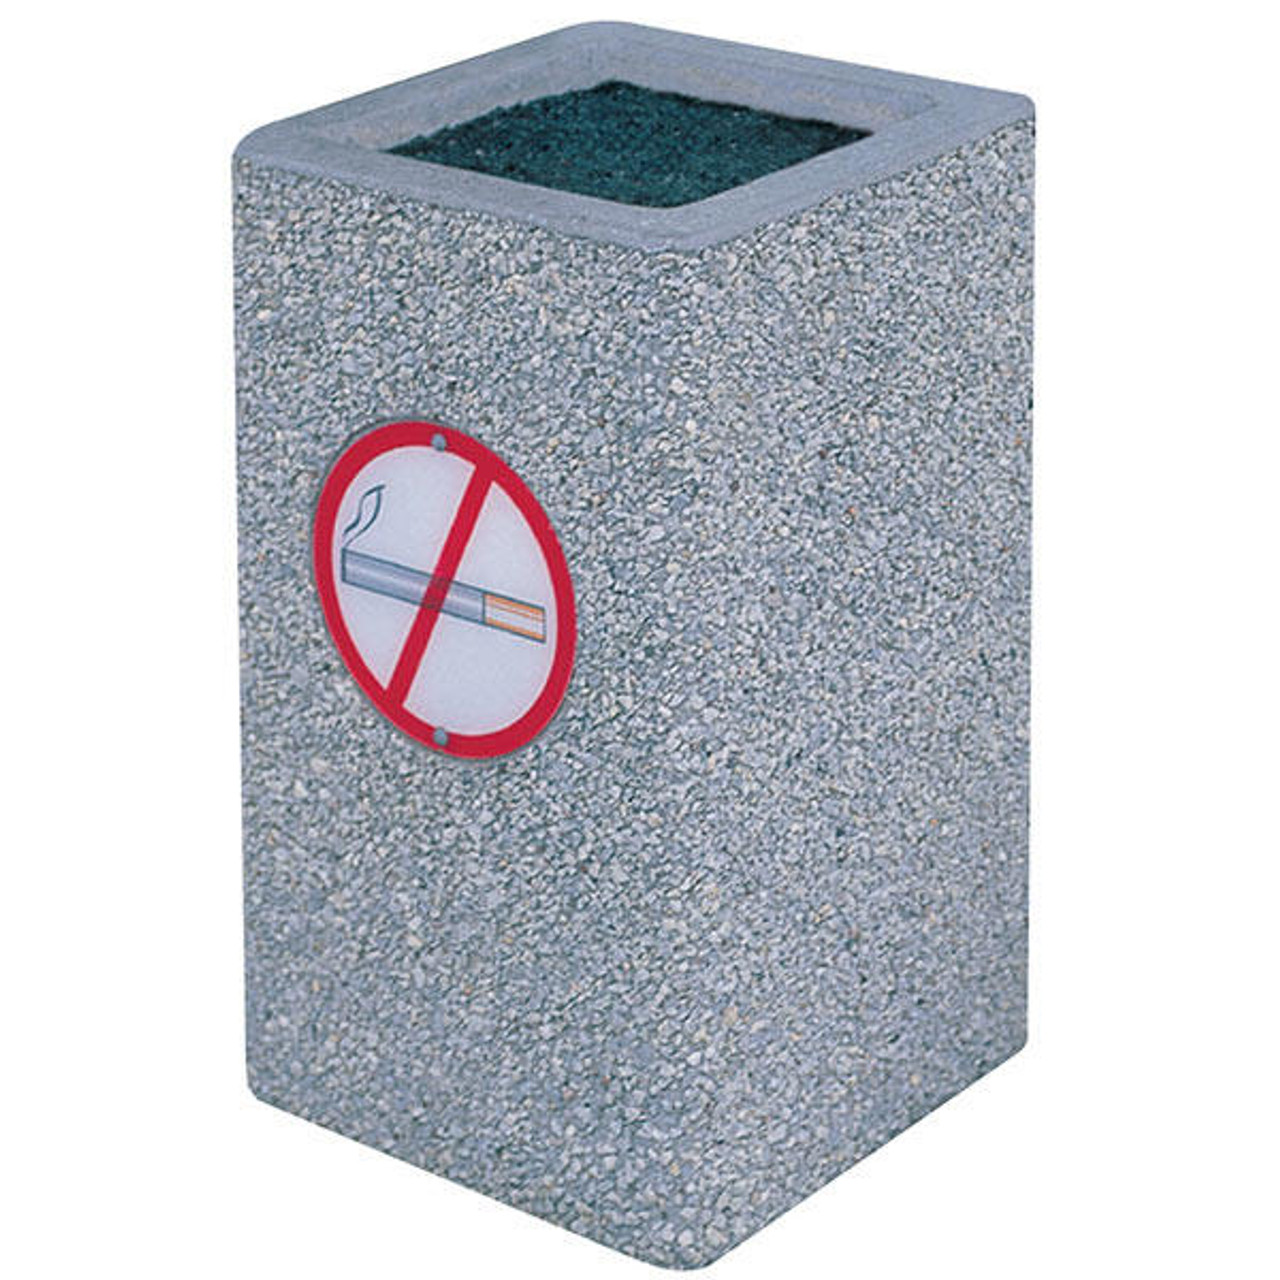 Concrete Ash Urn Outdoor Ashtray TF2045 with No Smoking Logo